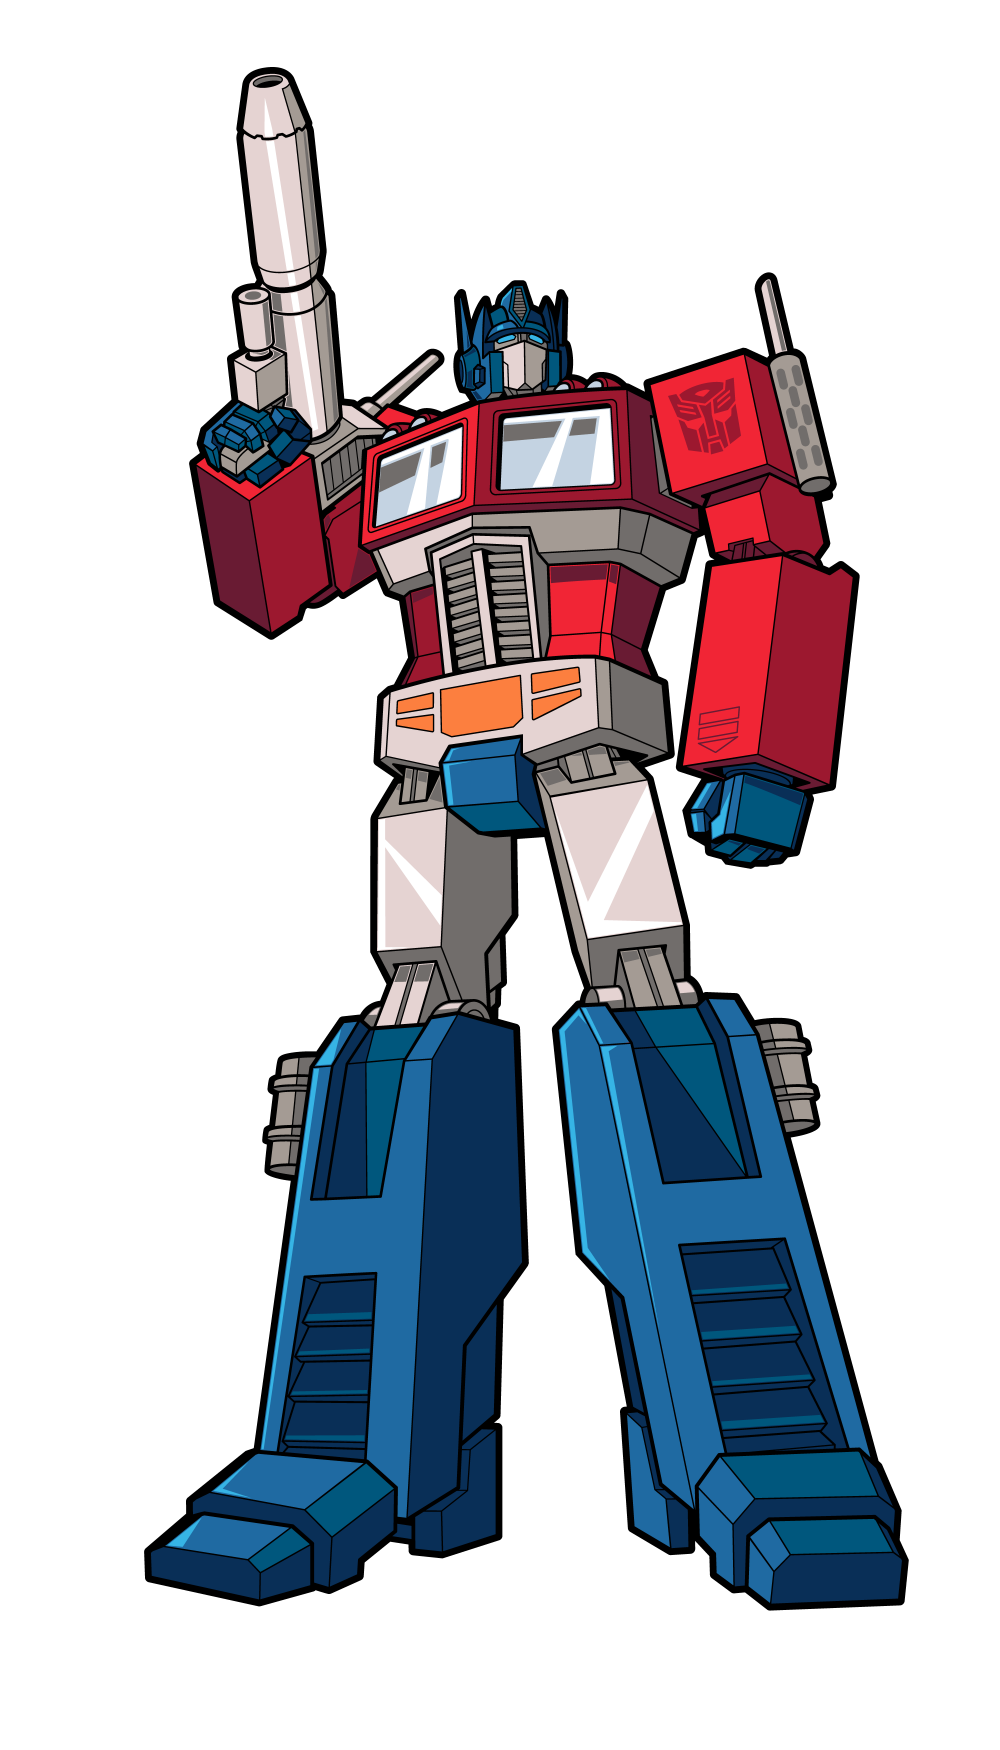 Transformers: Optimus Prime FiGPiN #667